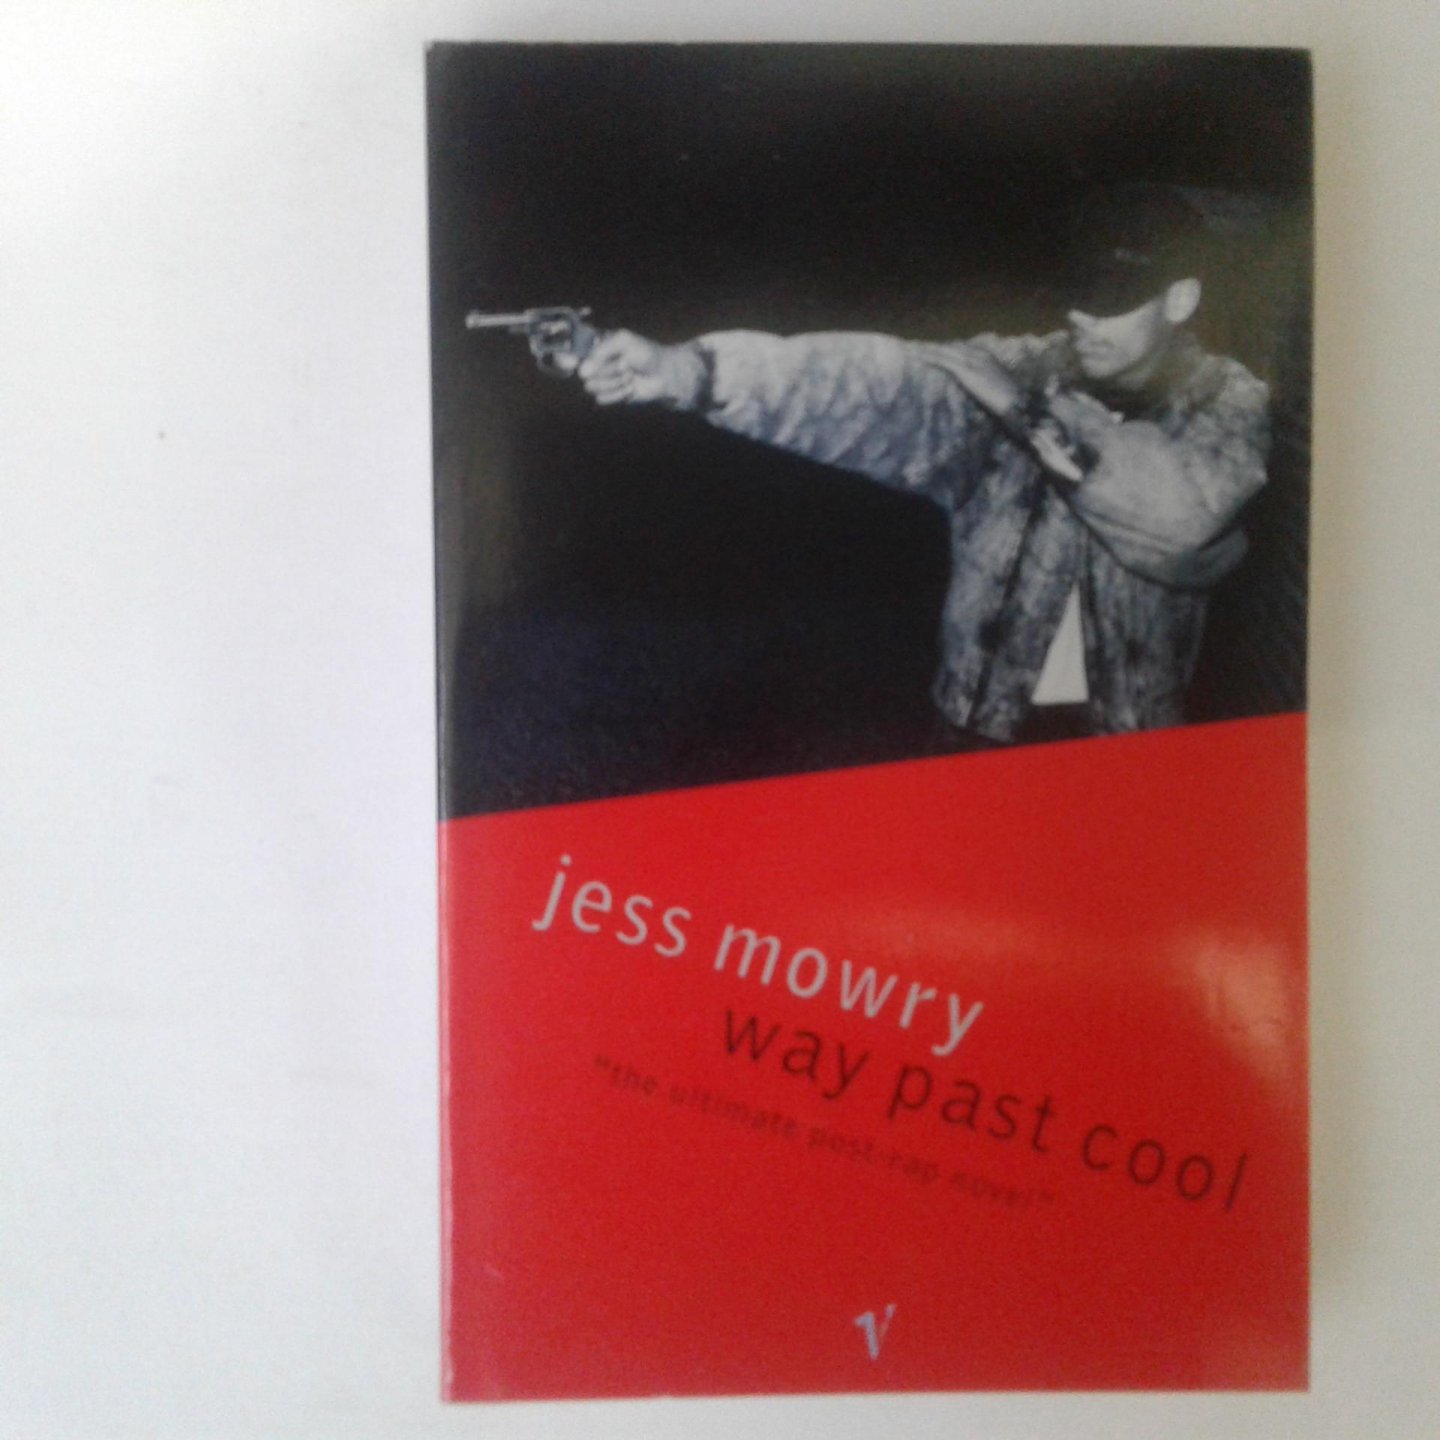 Mowry, Jess - Way Past Cool